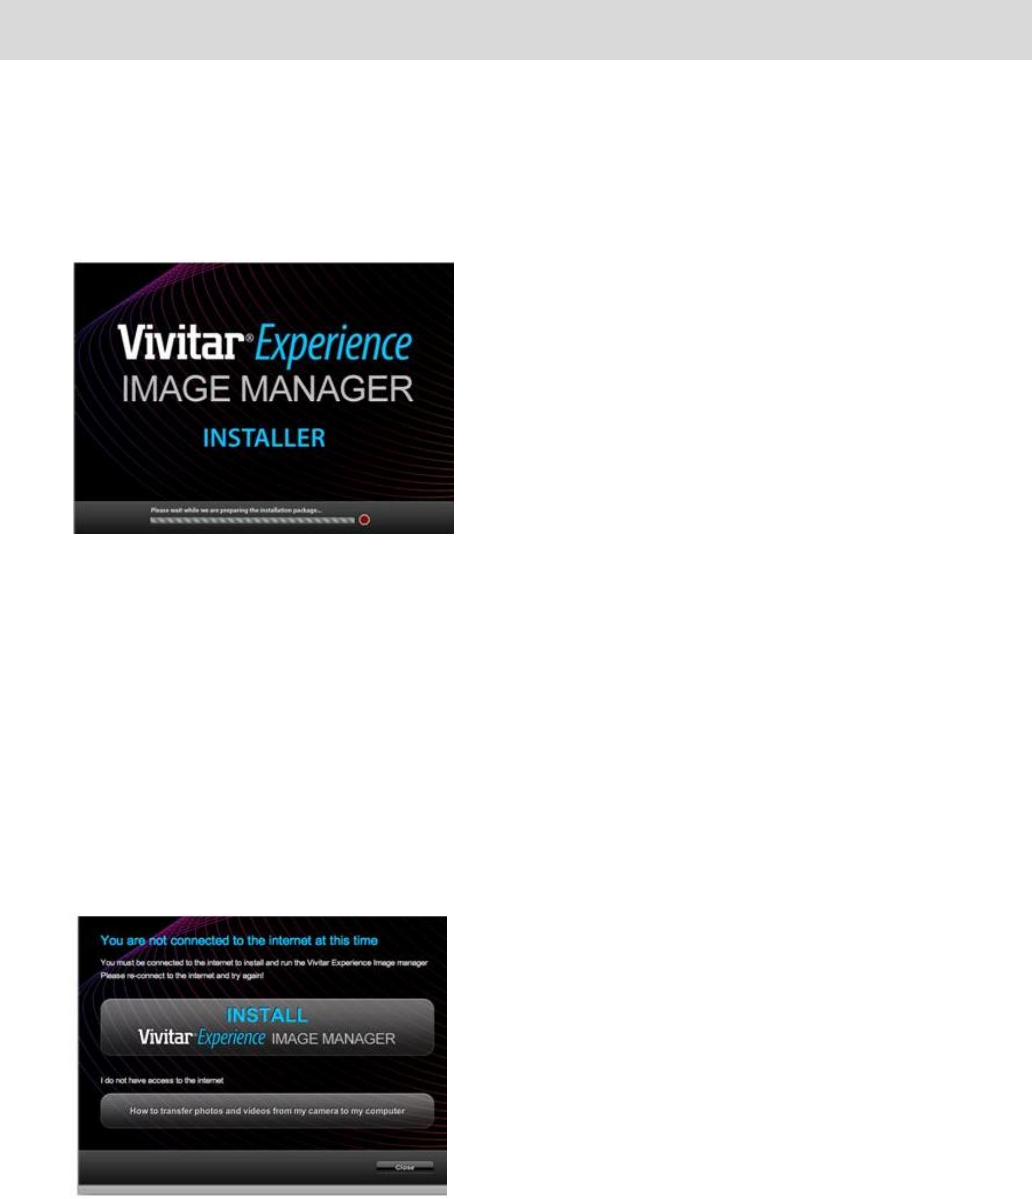 vivitar dvr613hd vivitar experience image manager software